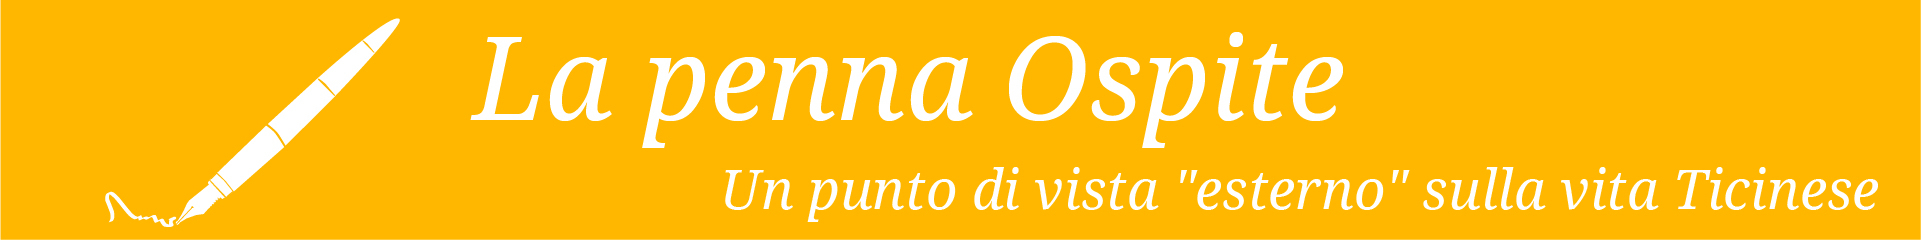 Banner giallo_Tavola disegno 1